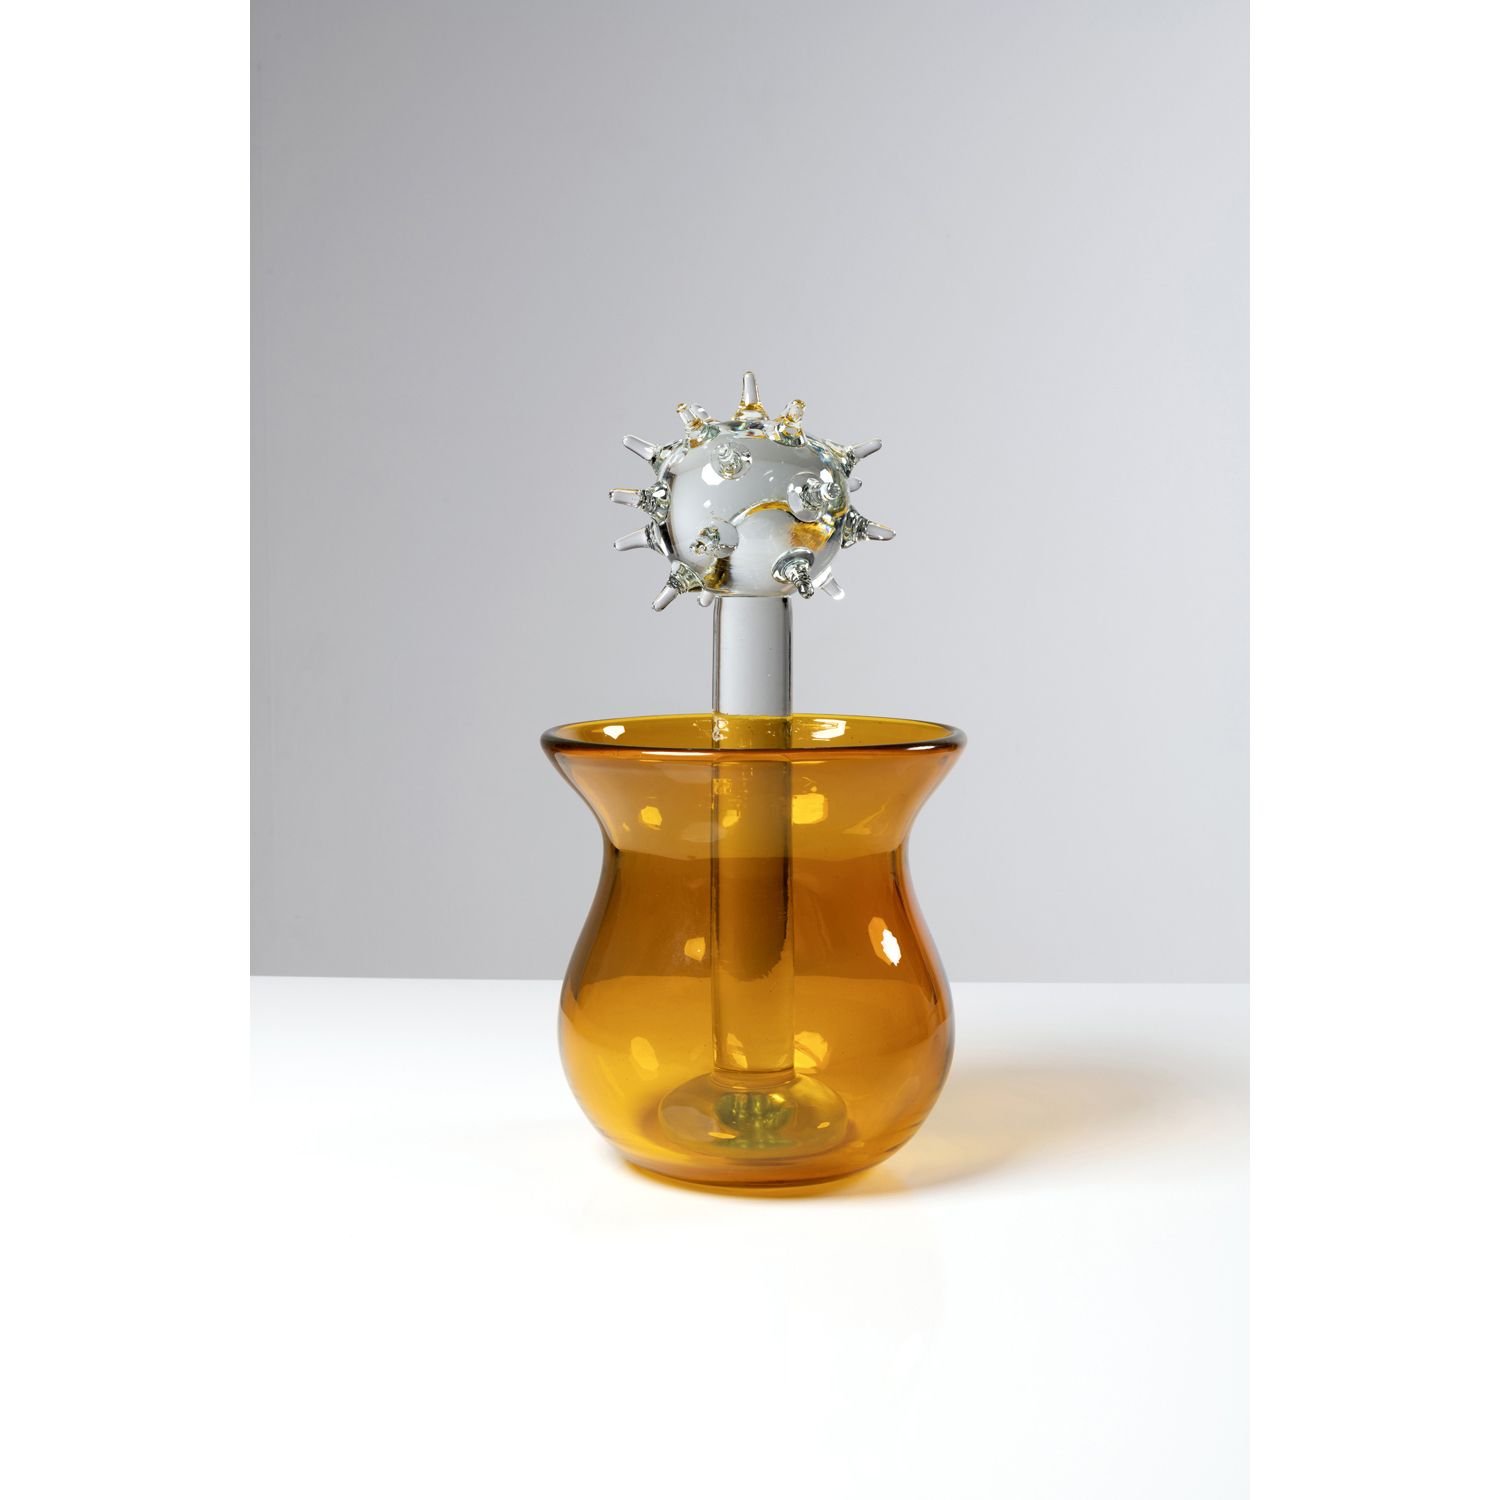 Null Marcial Berro (born 1952)

Sculptural vase

Hand blown glass

Edited by CIR&hellip;